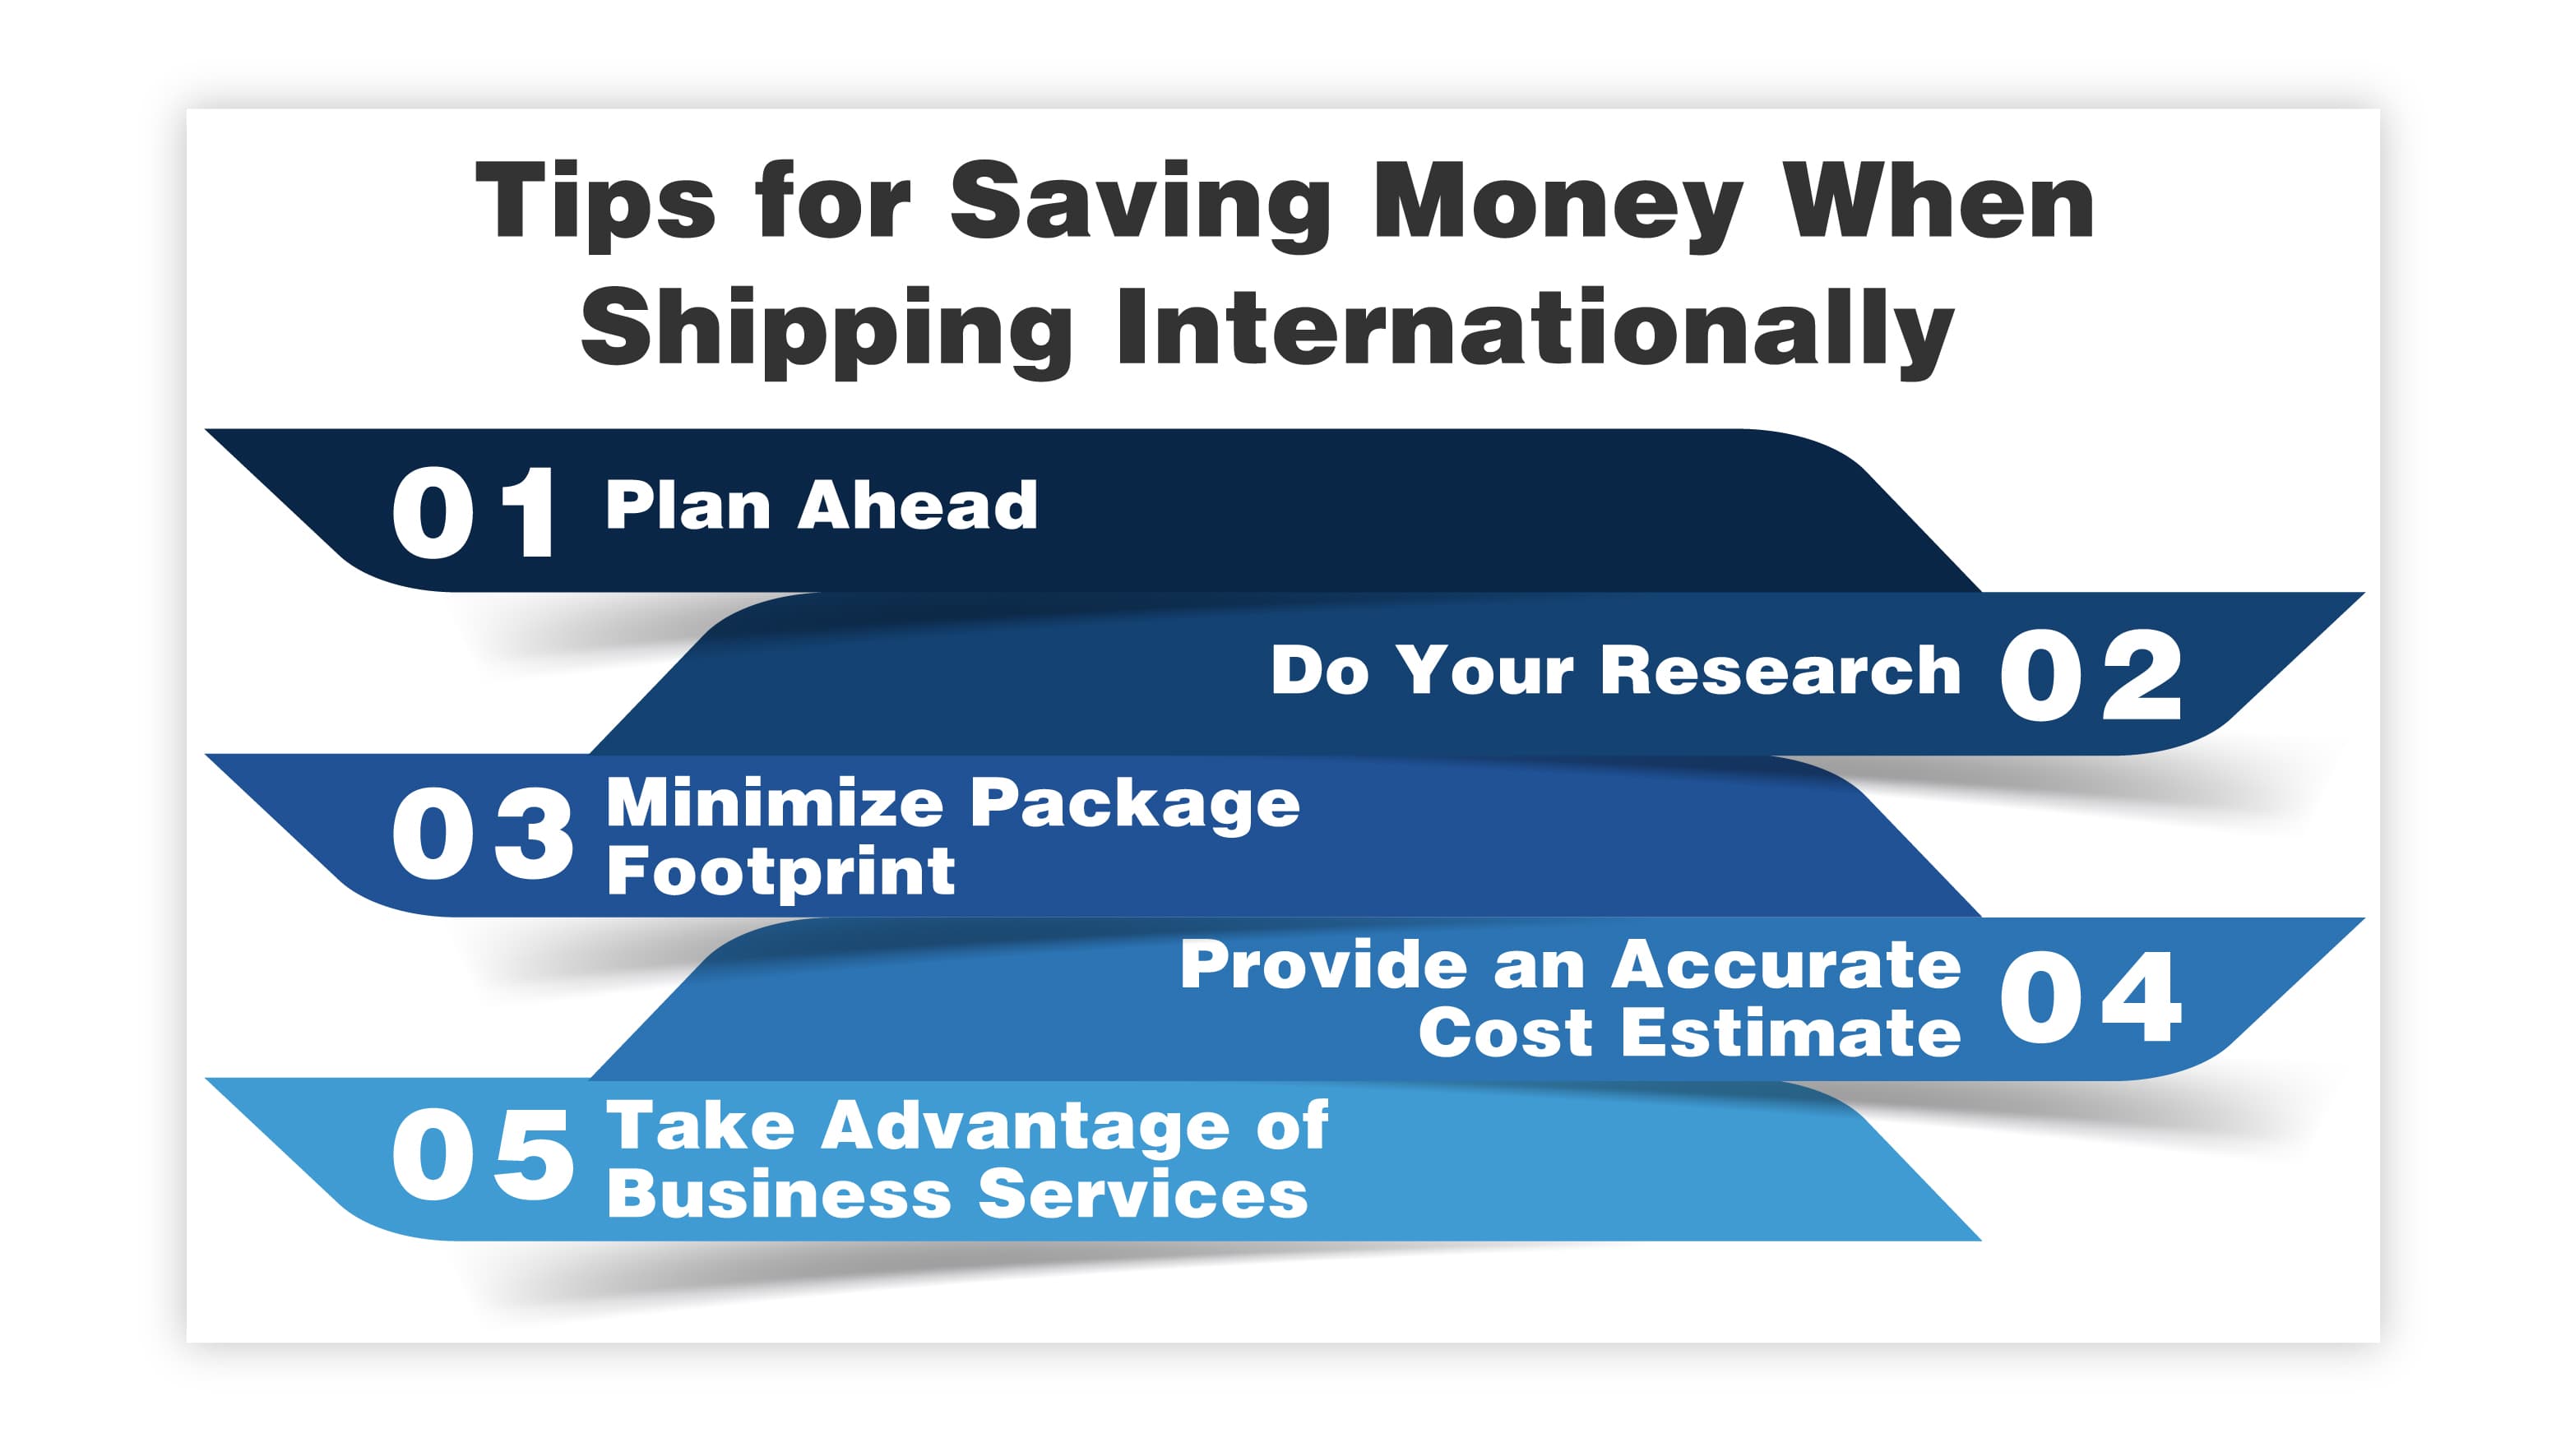 Tips for Saving Money When Shipping Internationally